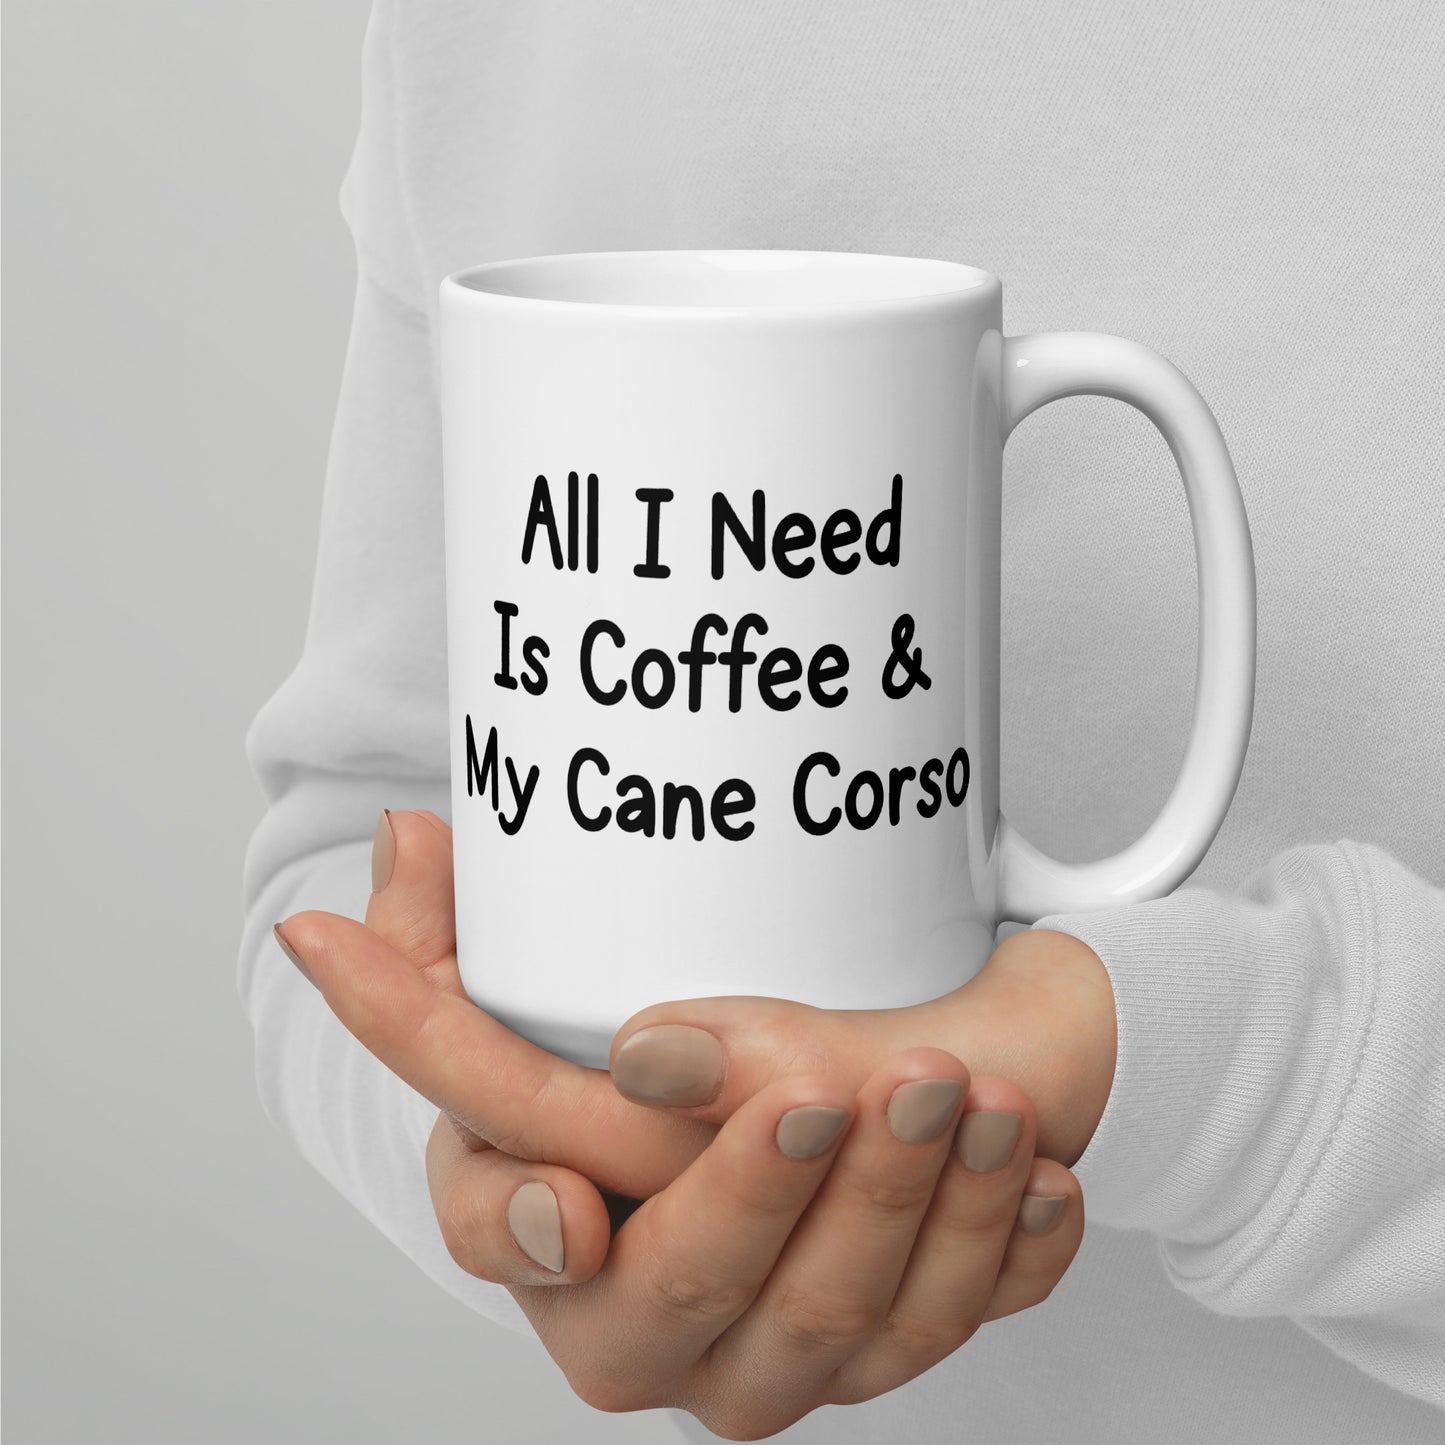 All I need is coffee & my Cane Corso mug by Dog Artistry.